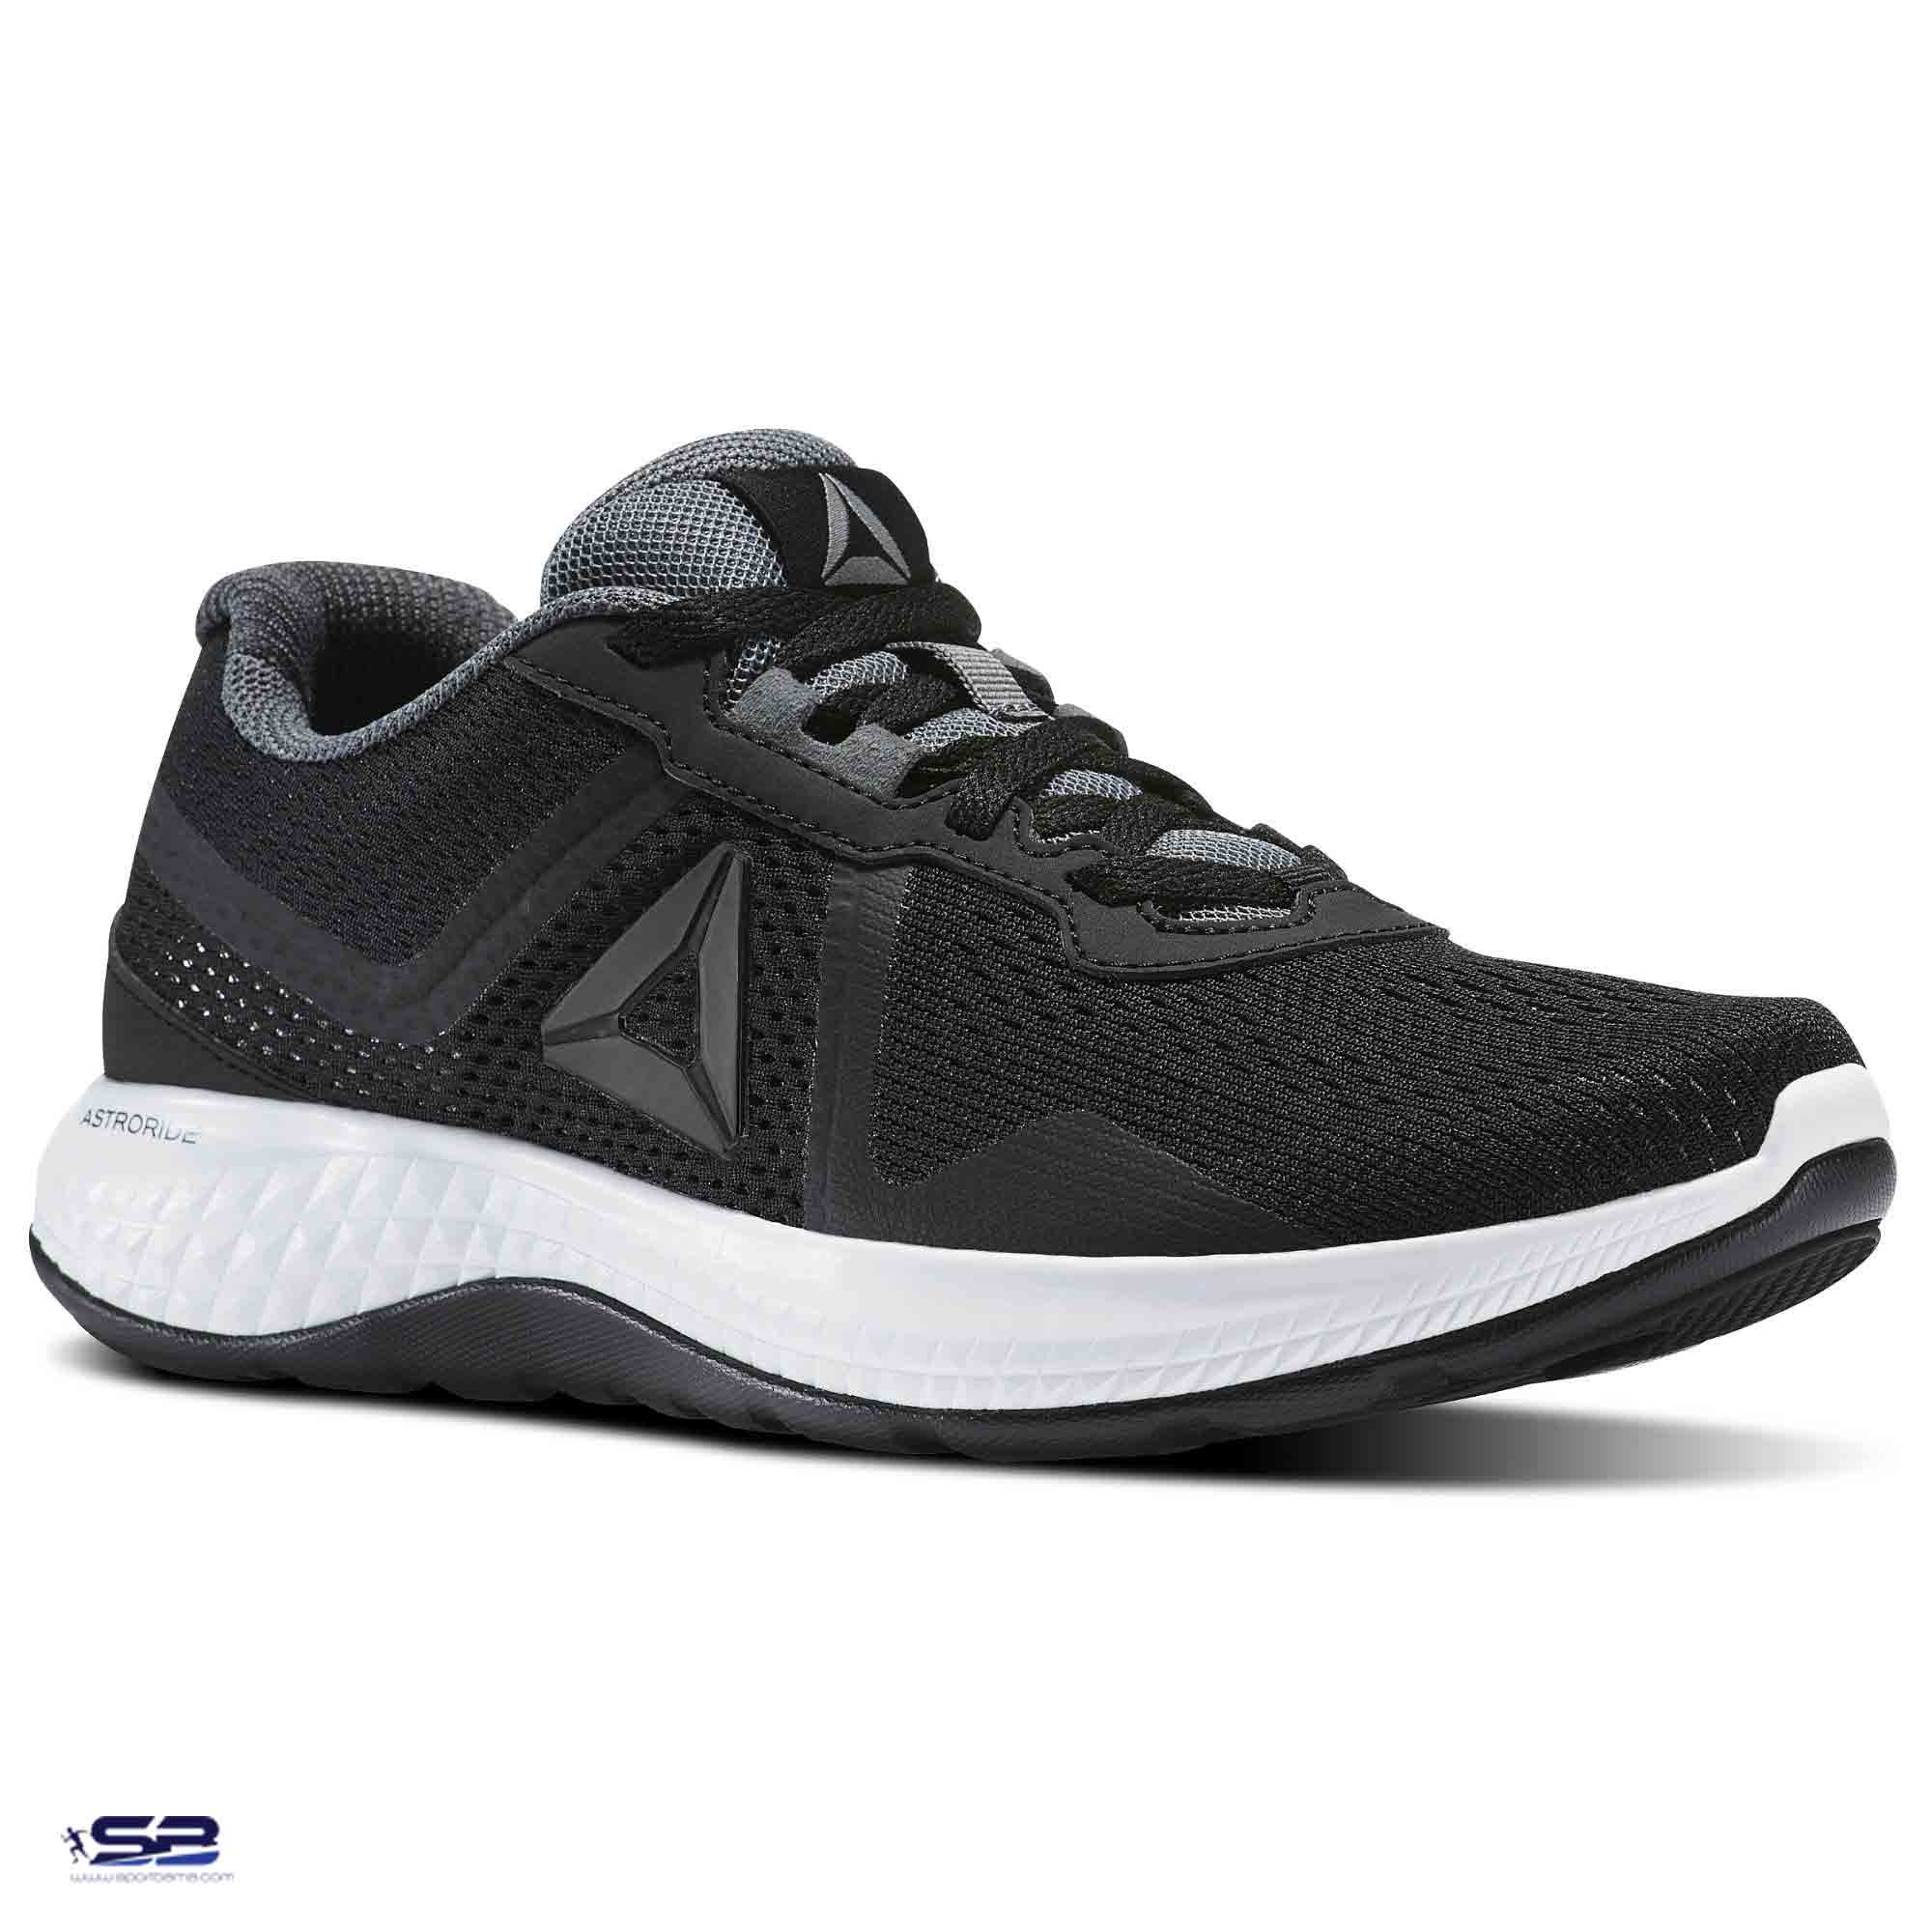  خرید  کفش کتانی اورجینال ریباک     Reebok Running Shoes BS5447  